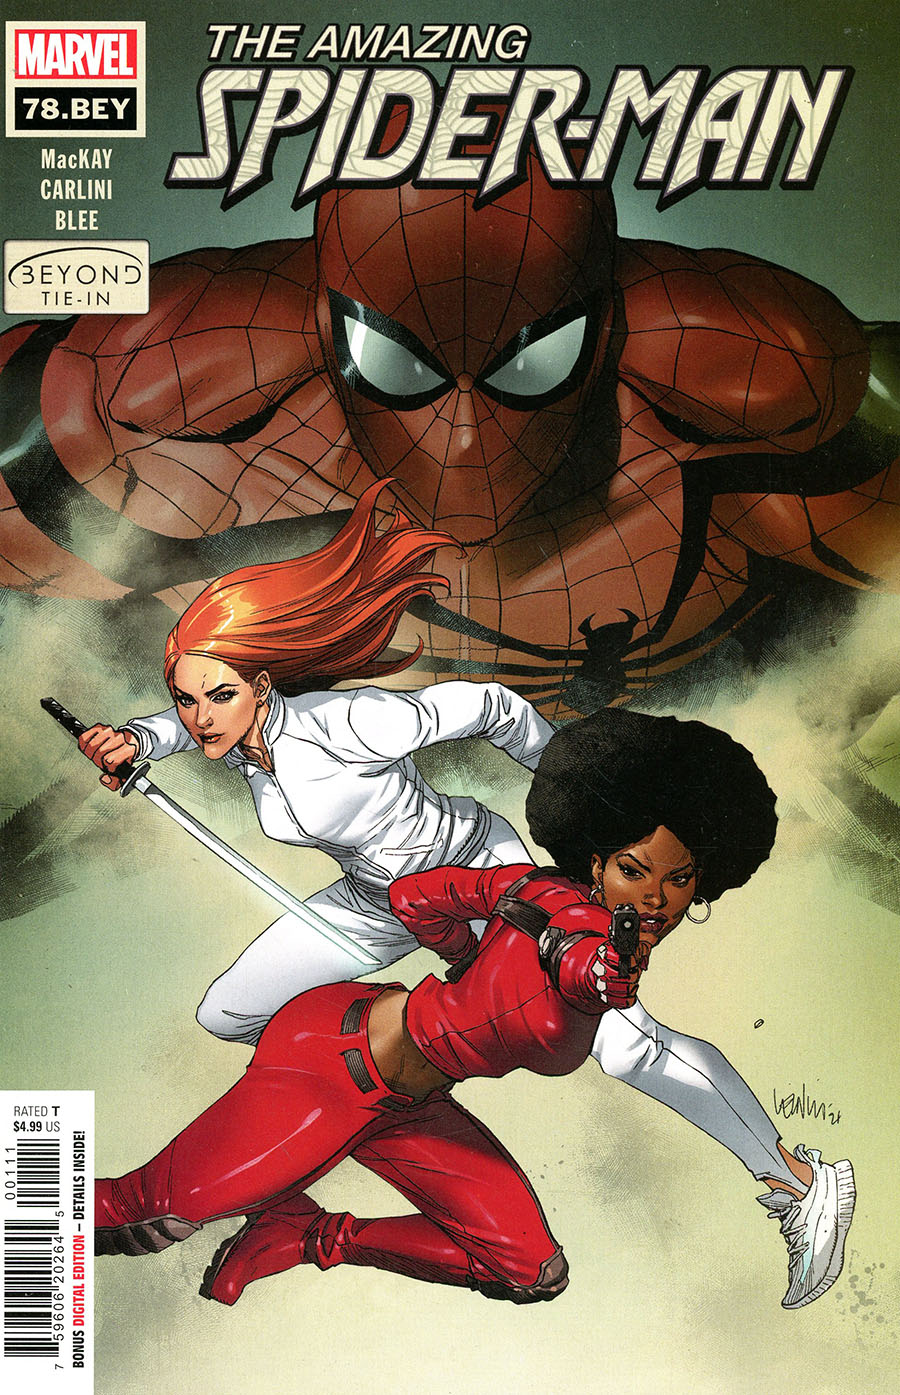 Amazing Spider-Man Vol 5 #78BEY Cover A Regular Leinil Francis Yu Cover